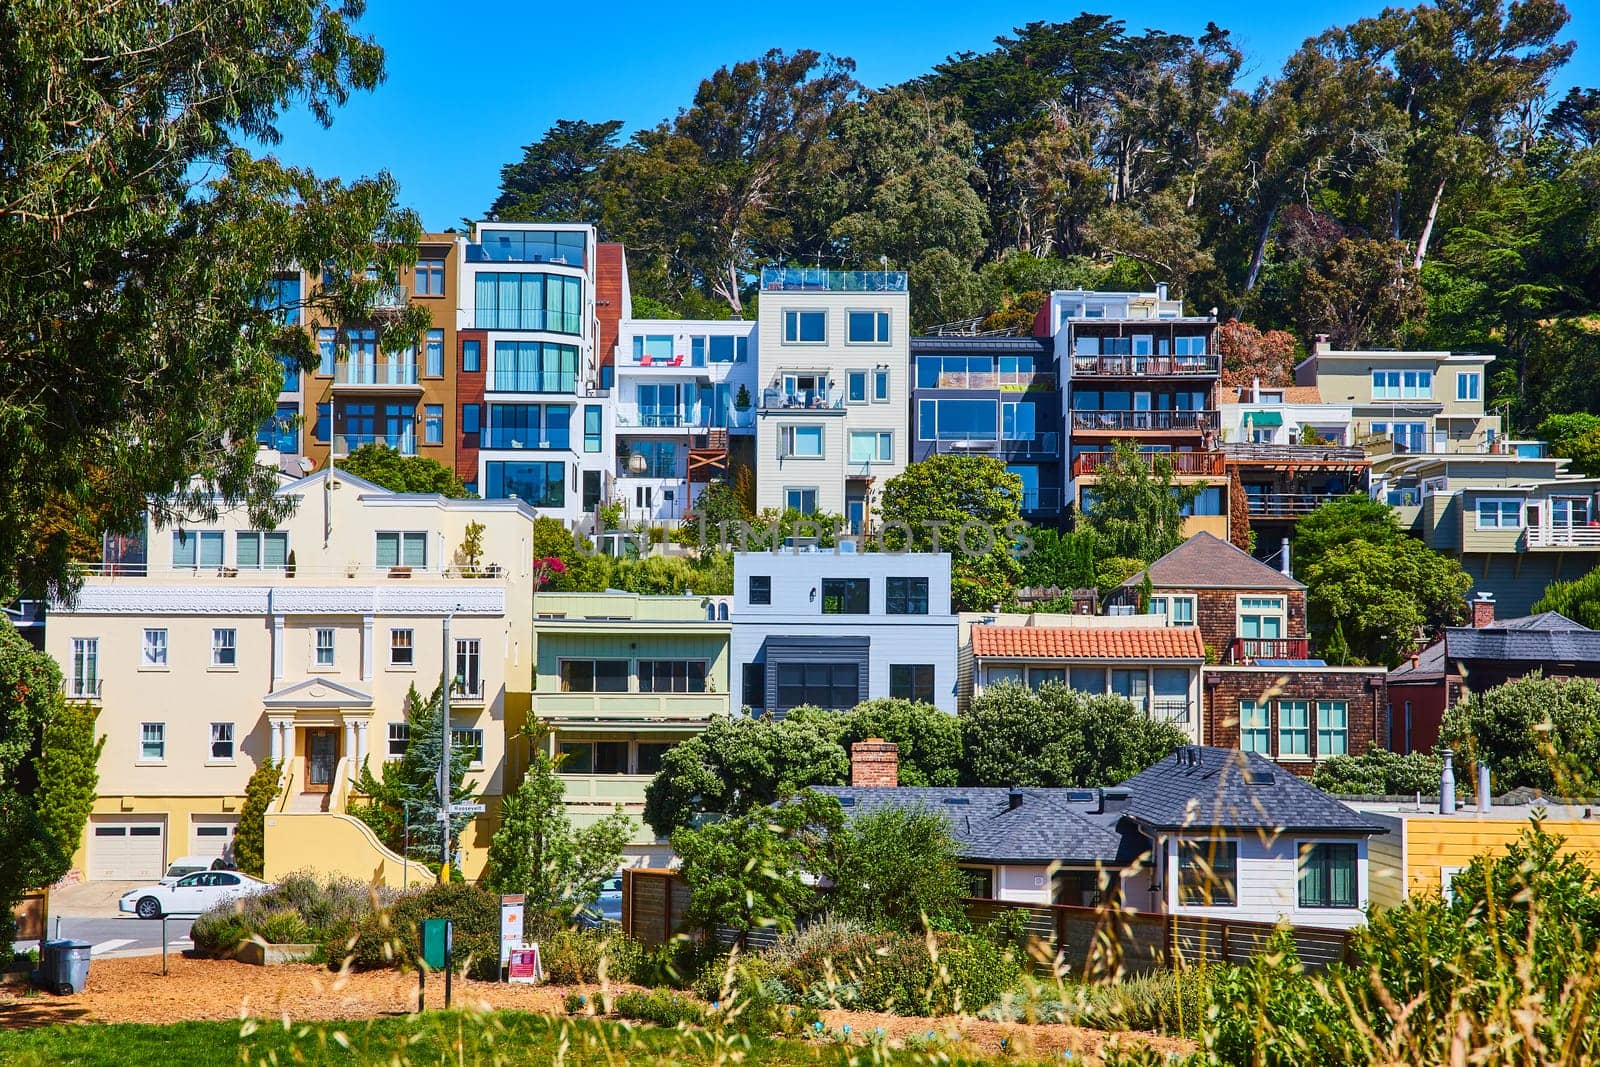 Image of Colorful neighborhood apartments on hillside in Corona Heights